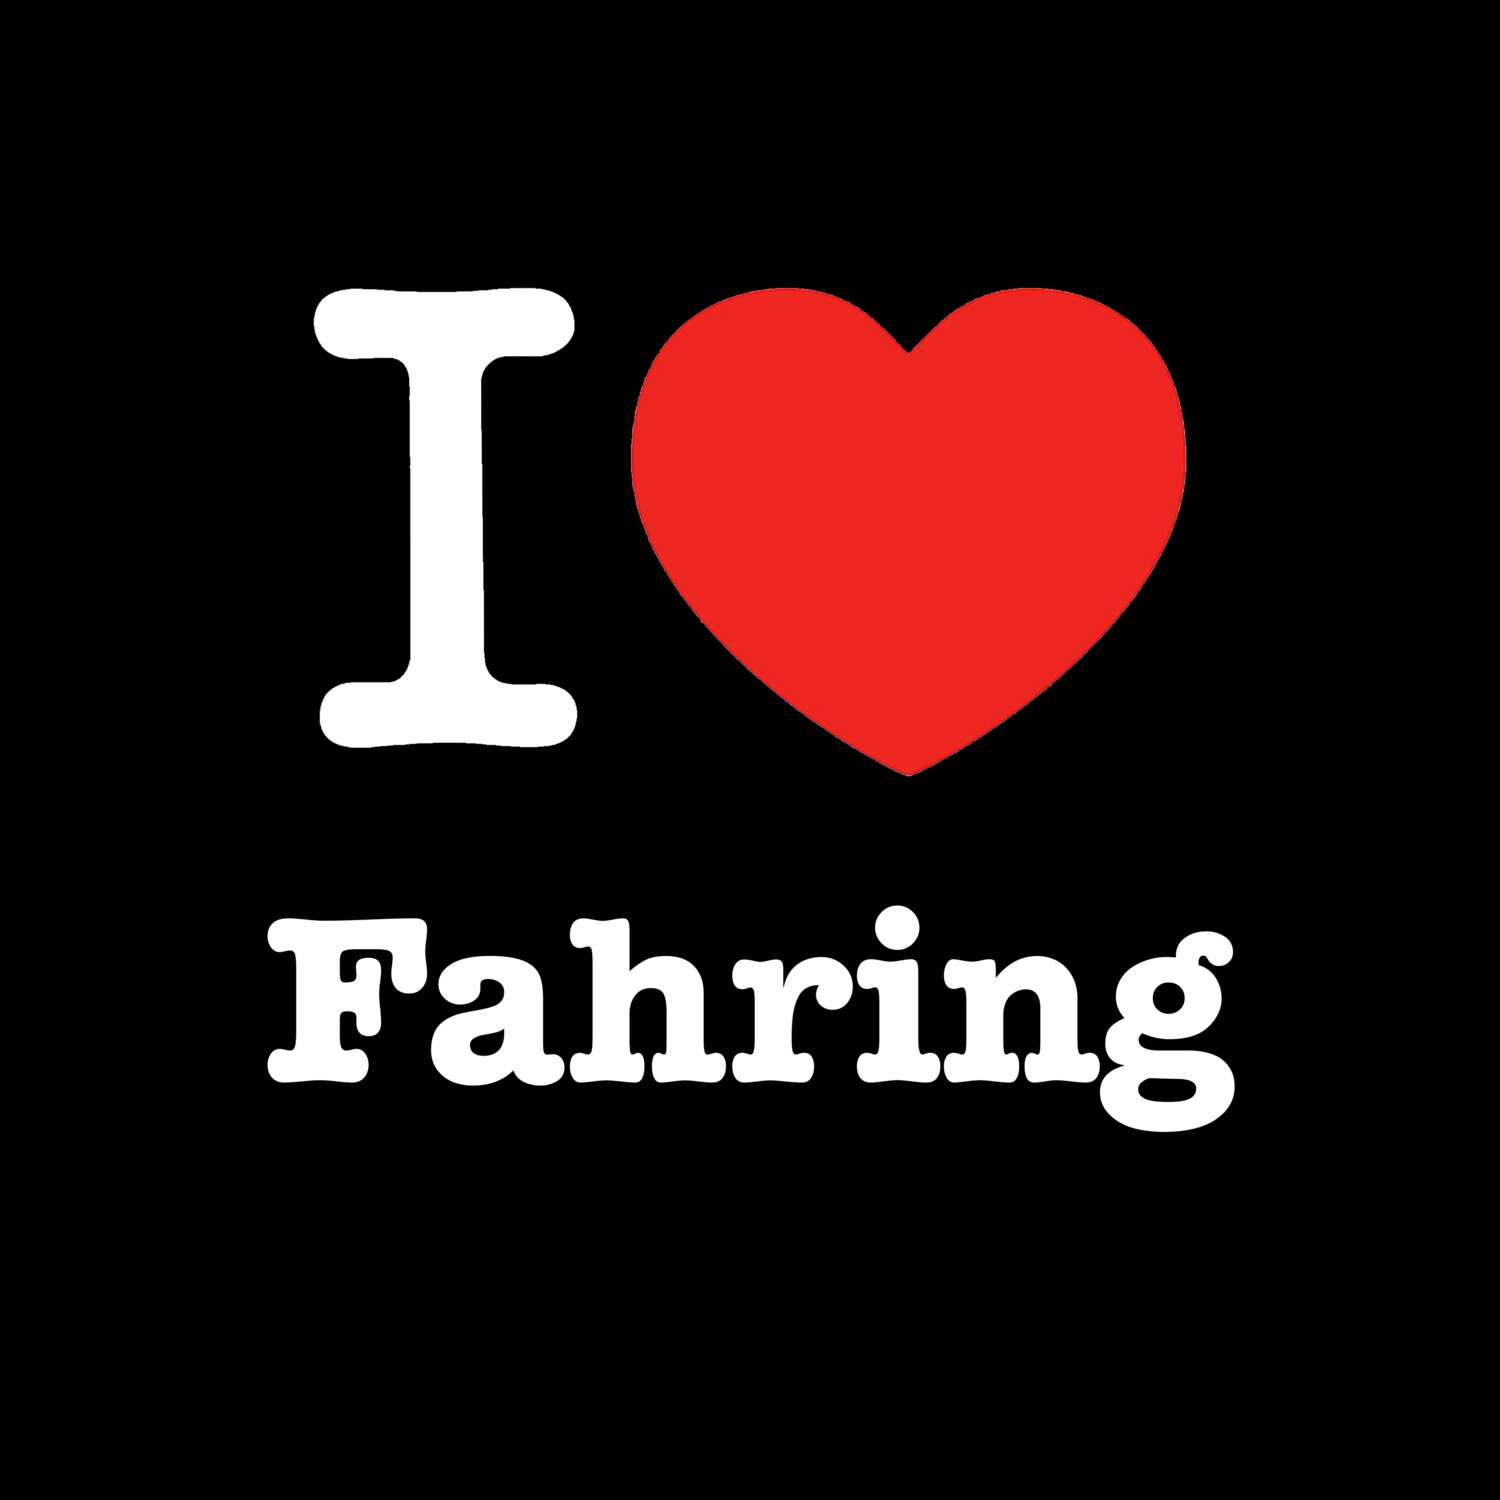 Fahring T-Shirt »I love«